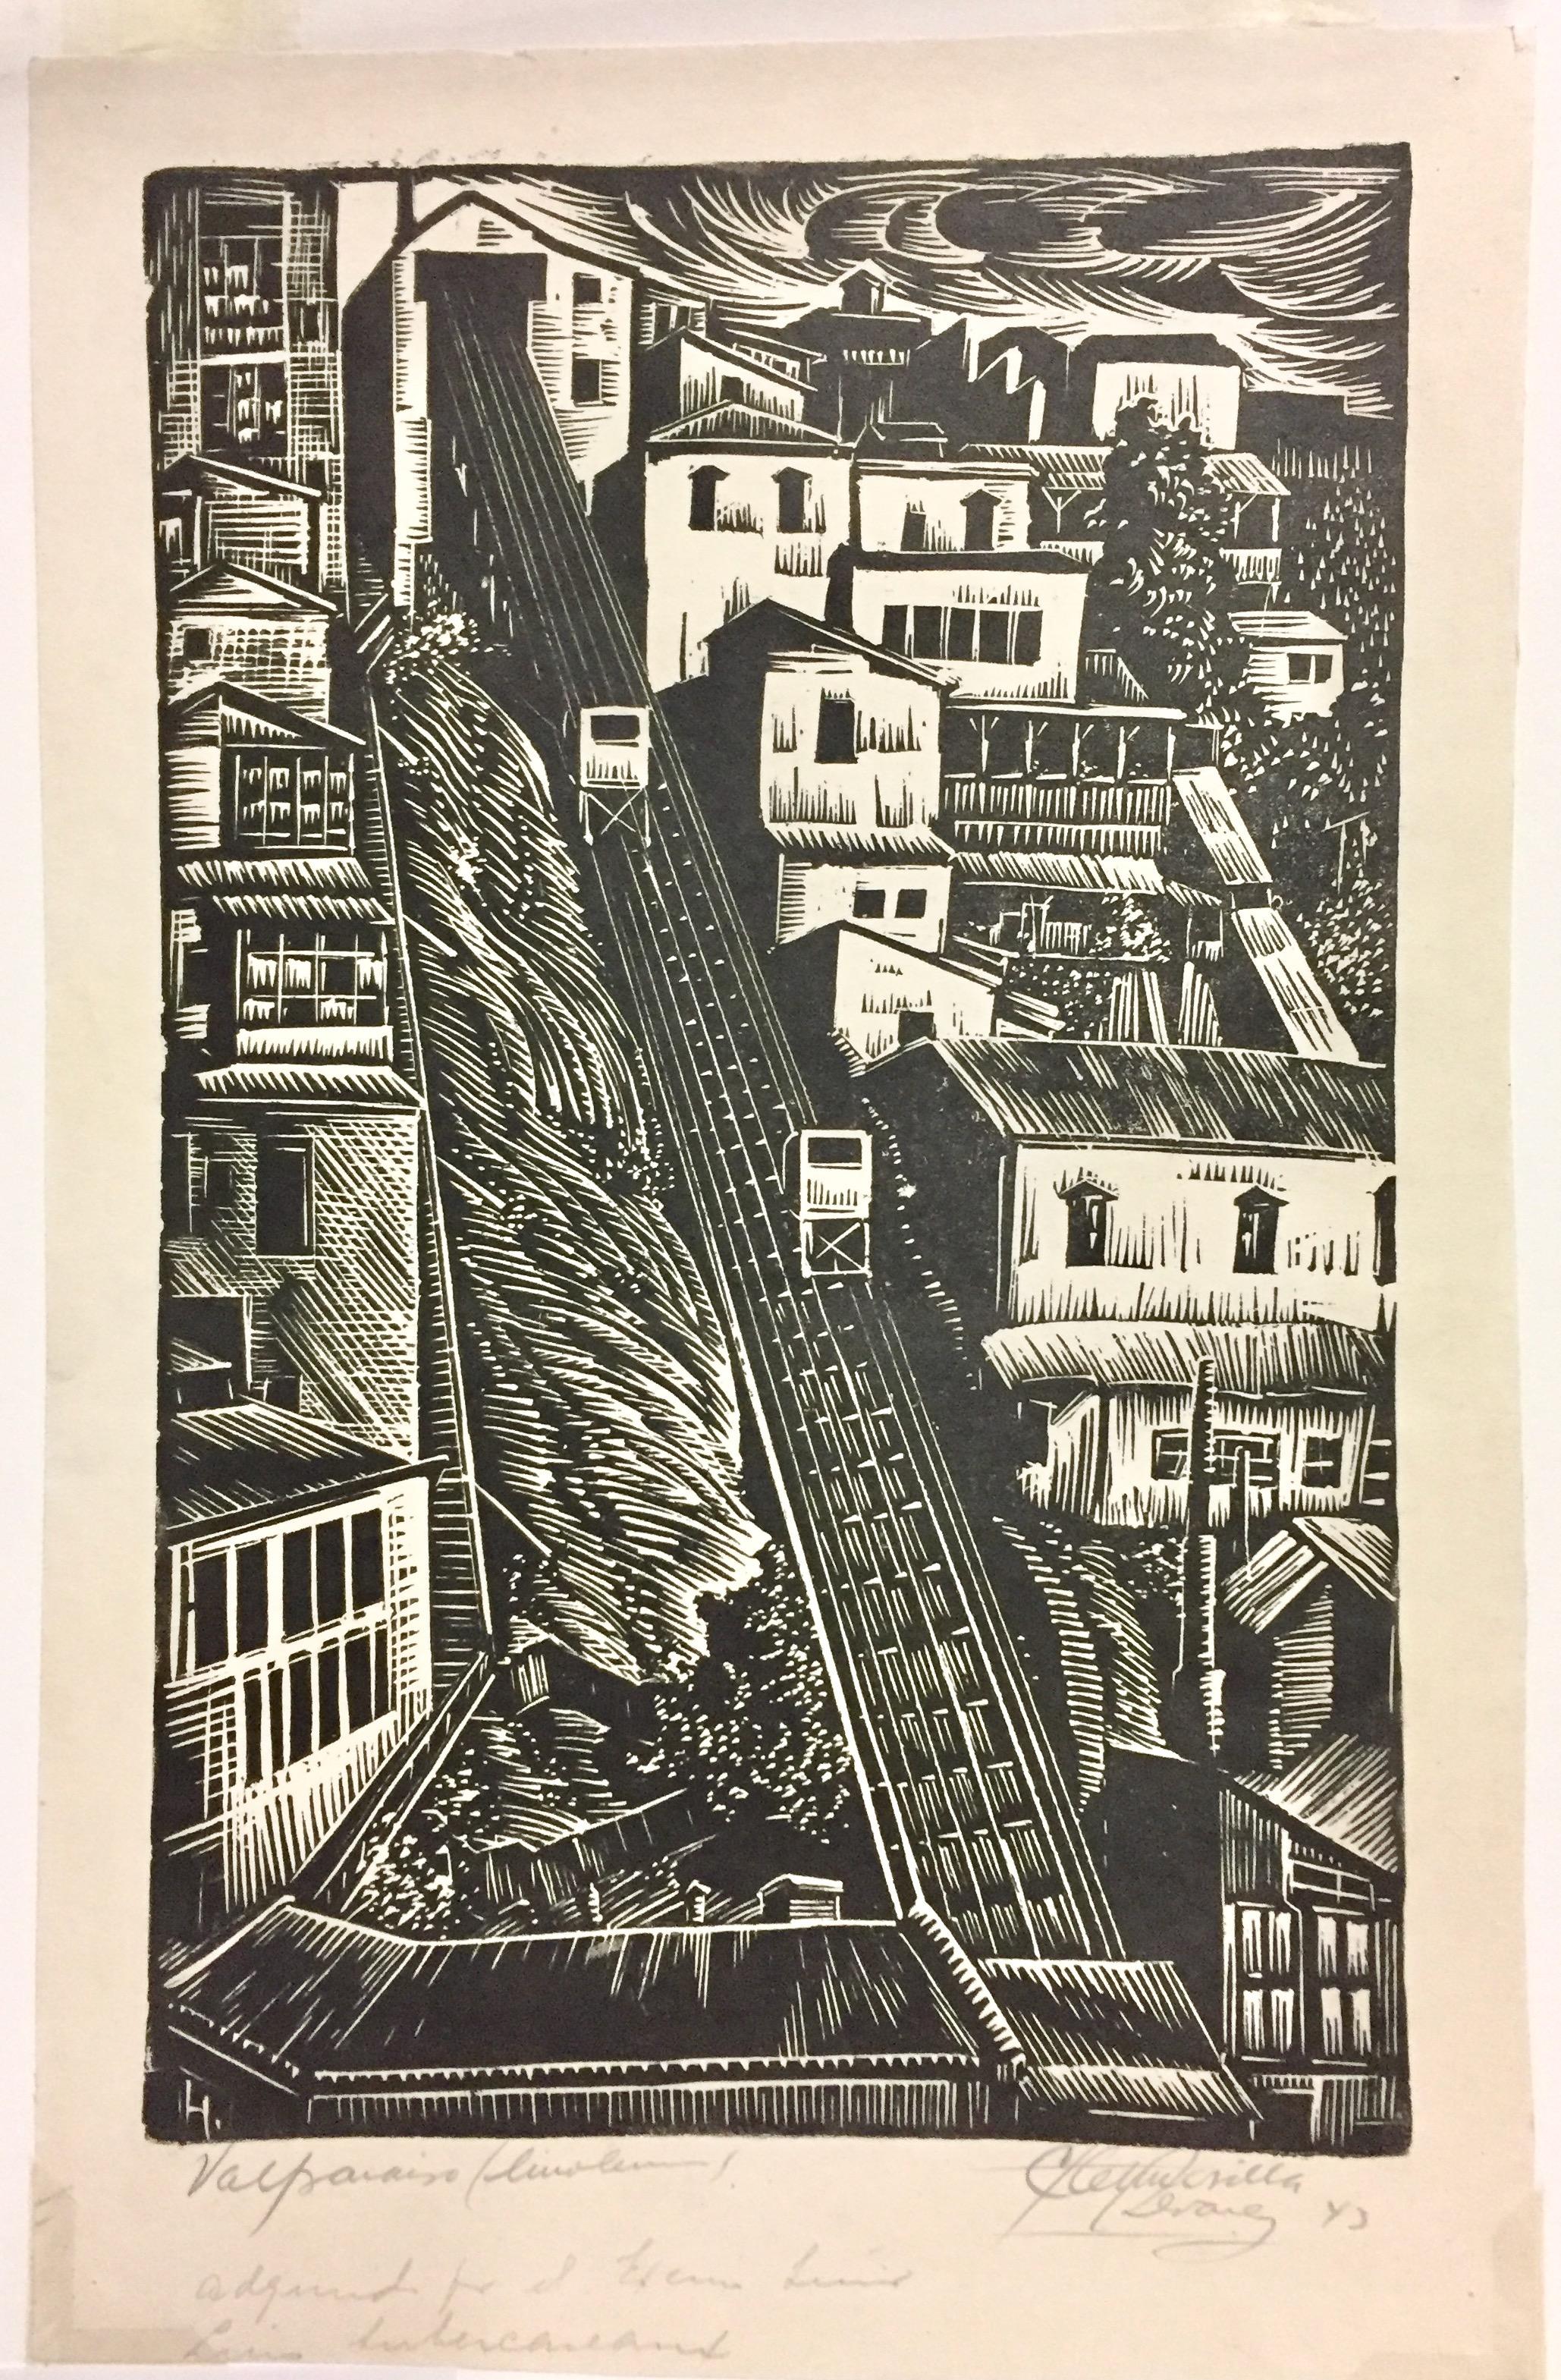 Valparaiso - Print by carlos hermosilla alvarez